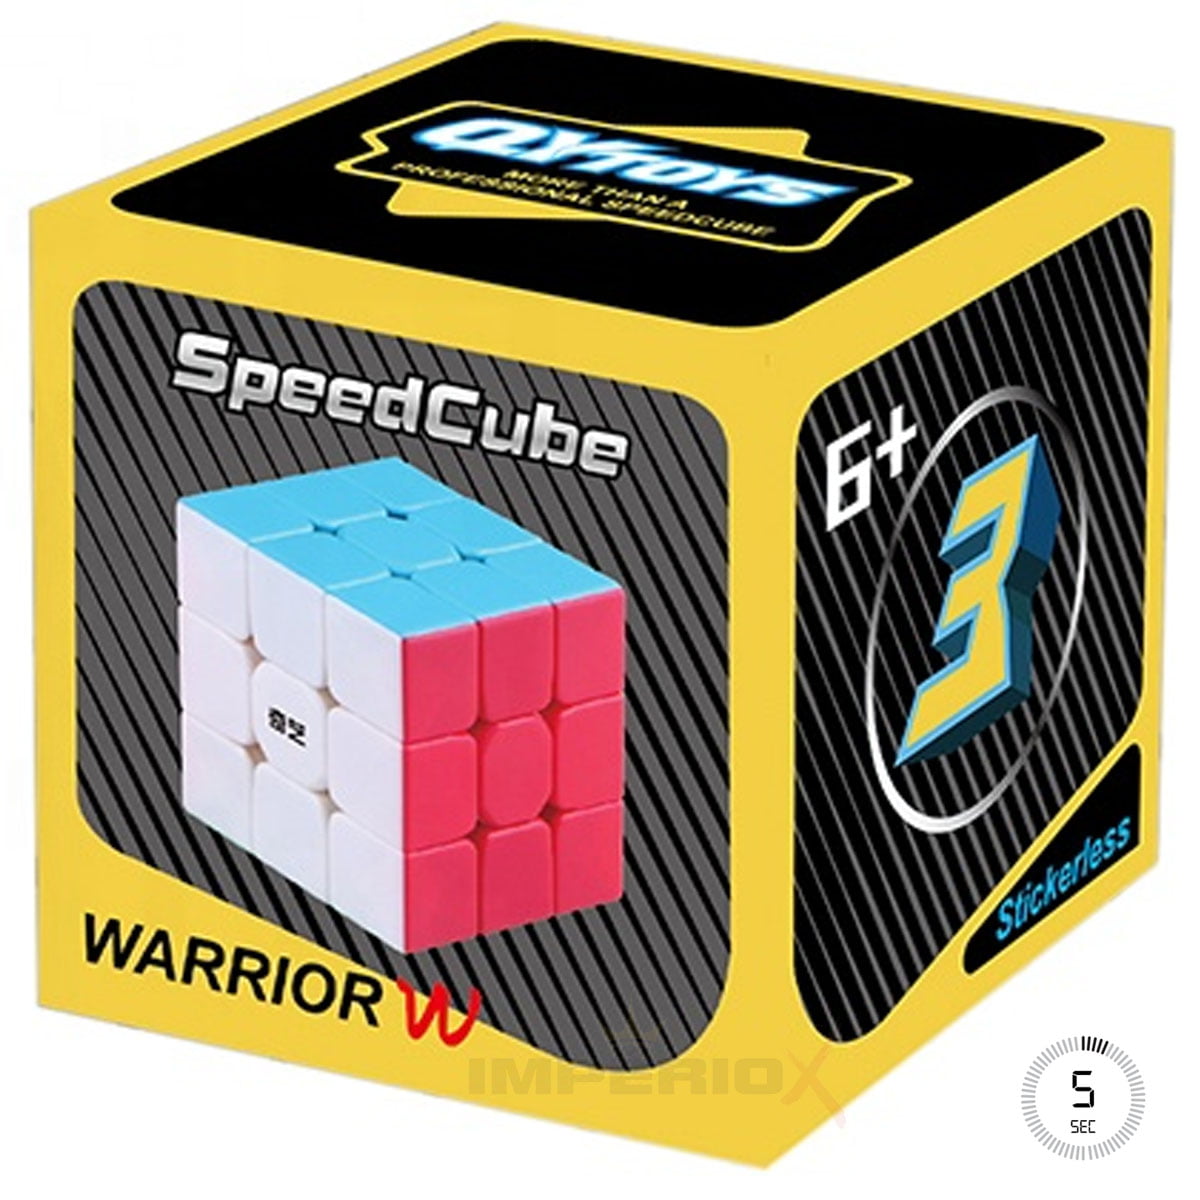 Cubo Mágico Speed 3x3x3 Profissional Original